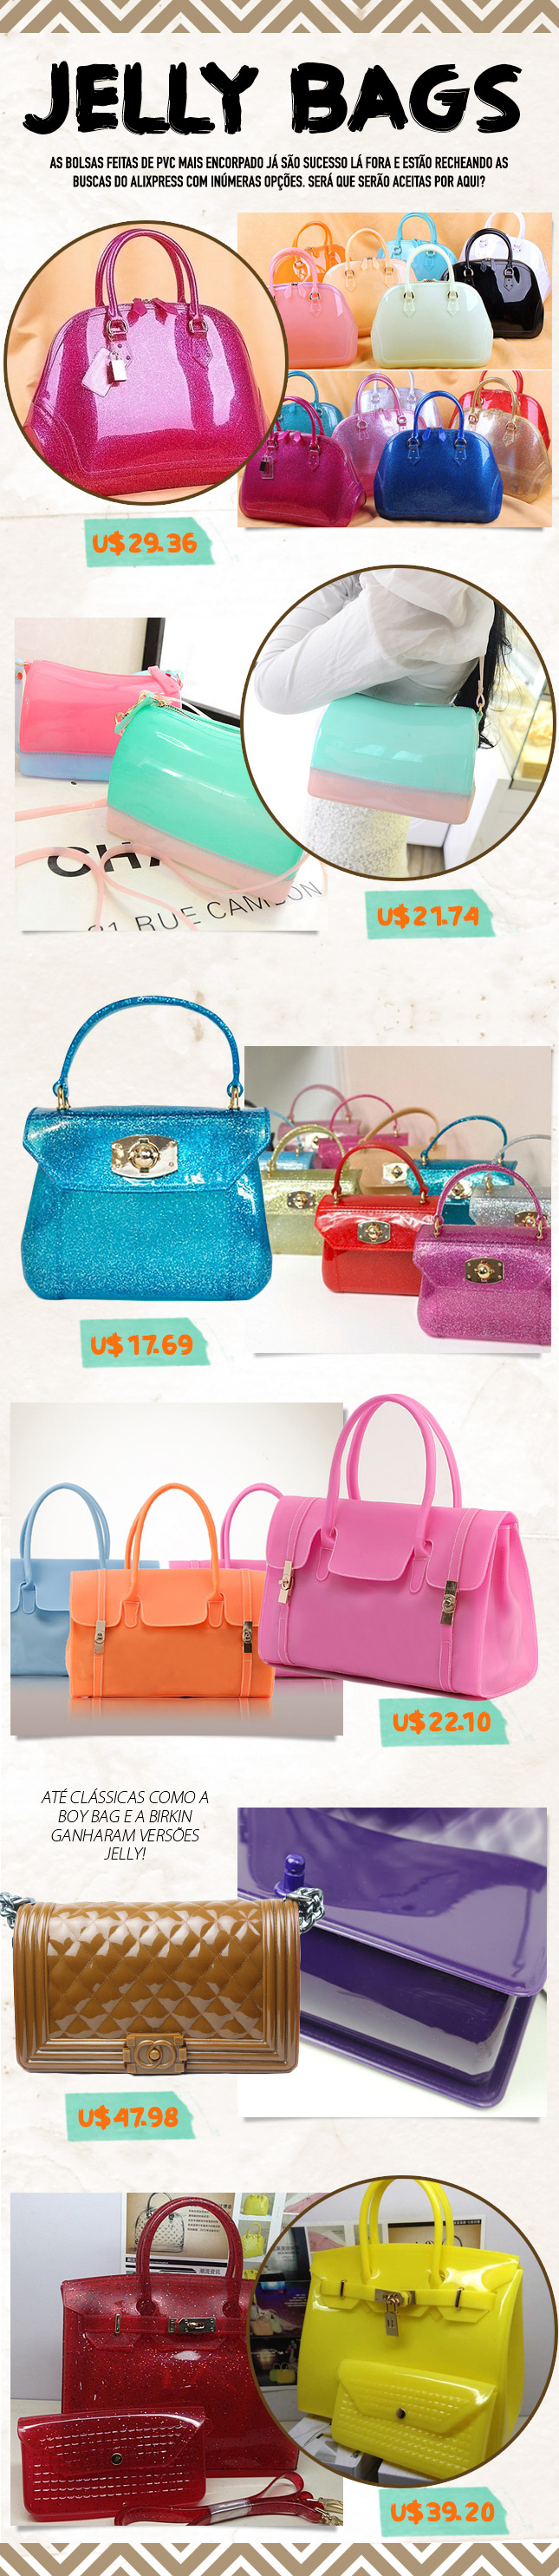 jelly bags tendencia blog de moda oh my closet bolsas jelly bolsa pac plastico moda birkin inspired ali express